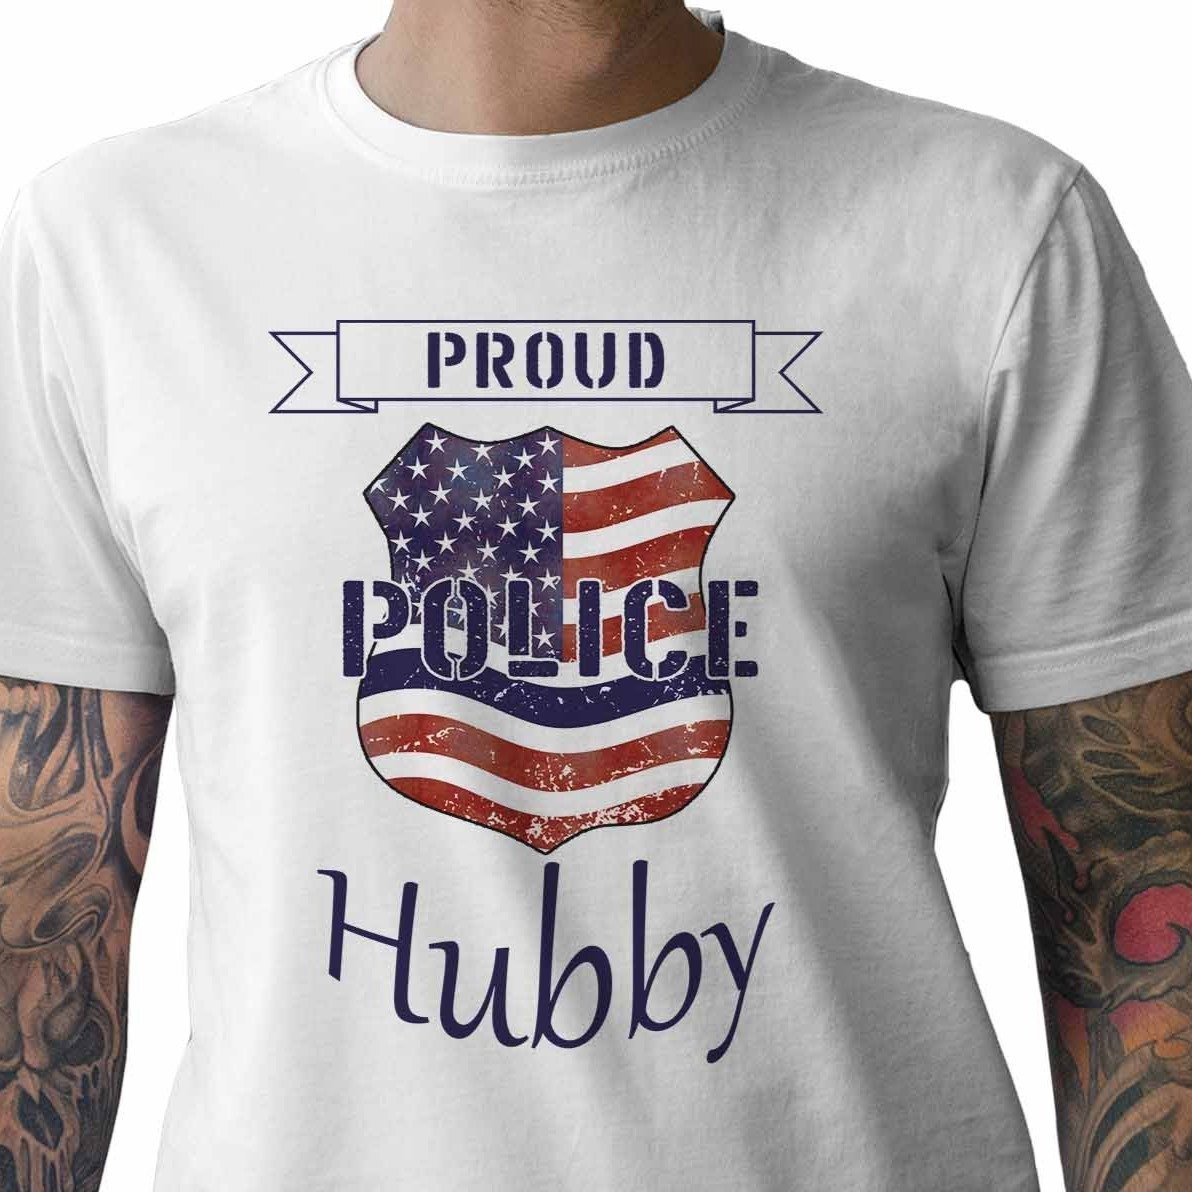 Proud Police Hubby - My Custom Tee Party